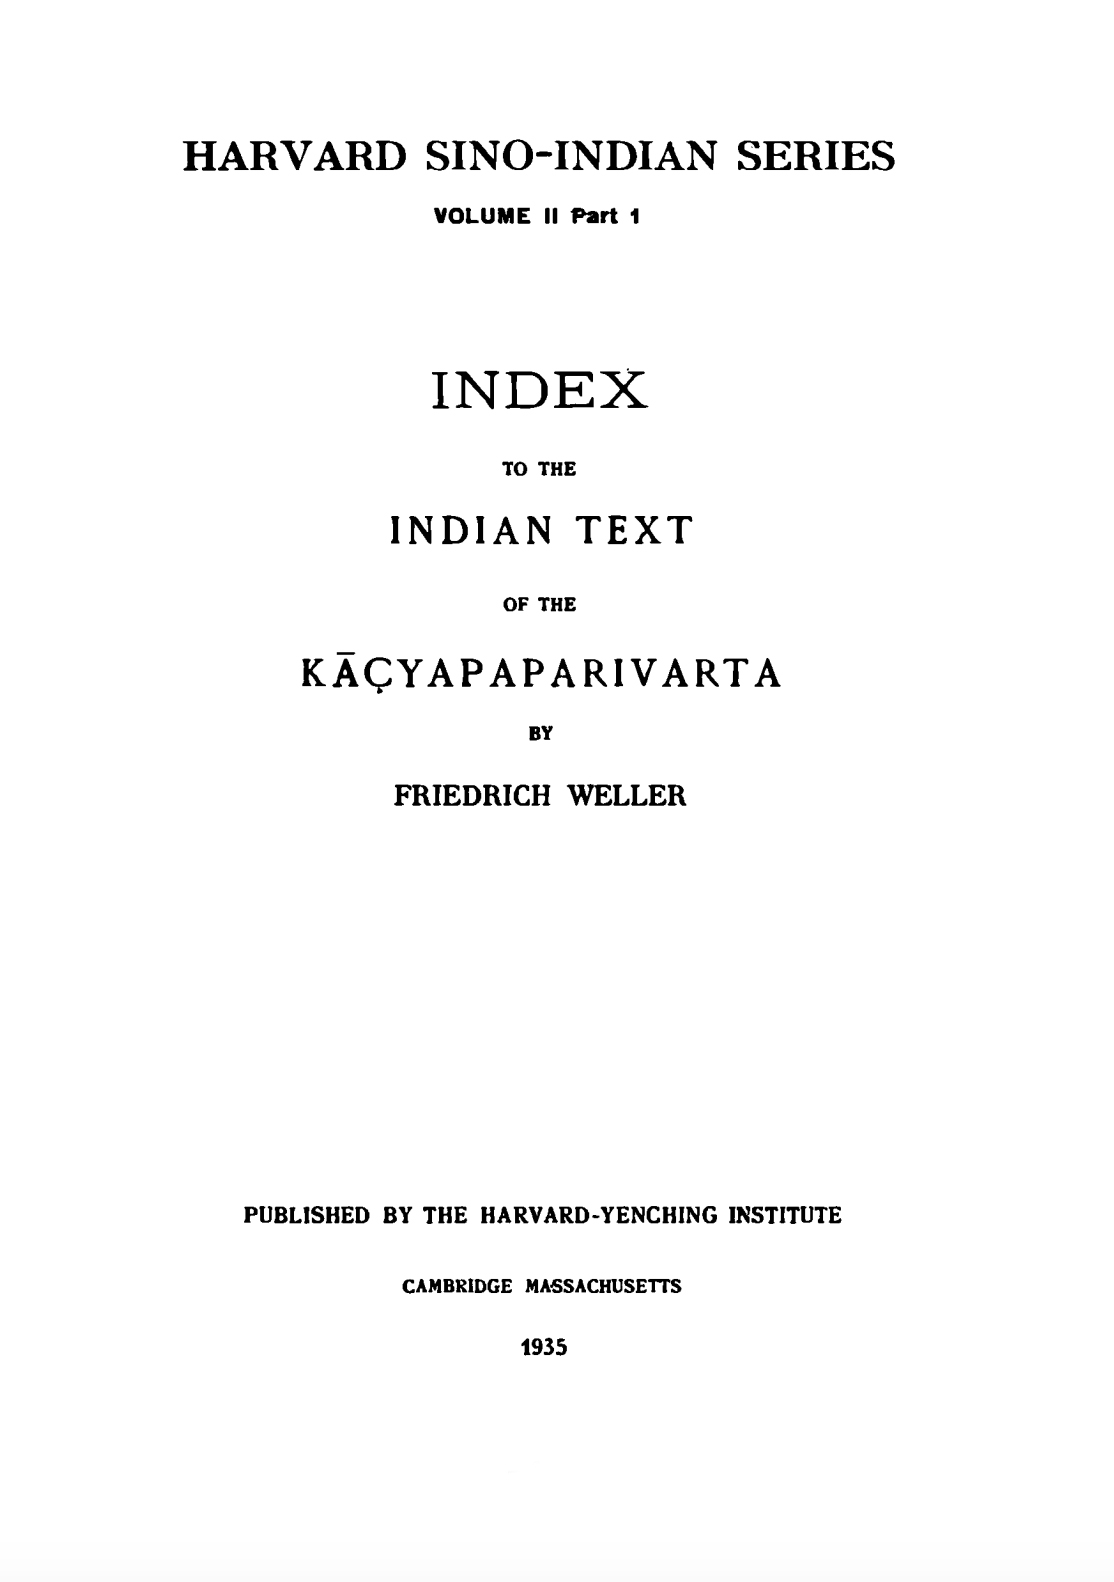 Index to the Indian Text of the Kacyapaparivarta Vol 2 Pt 1-front.jpg